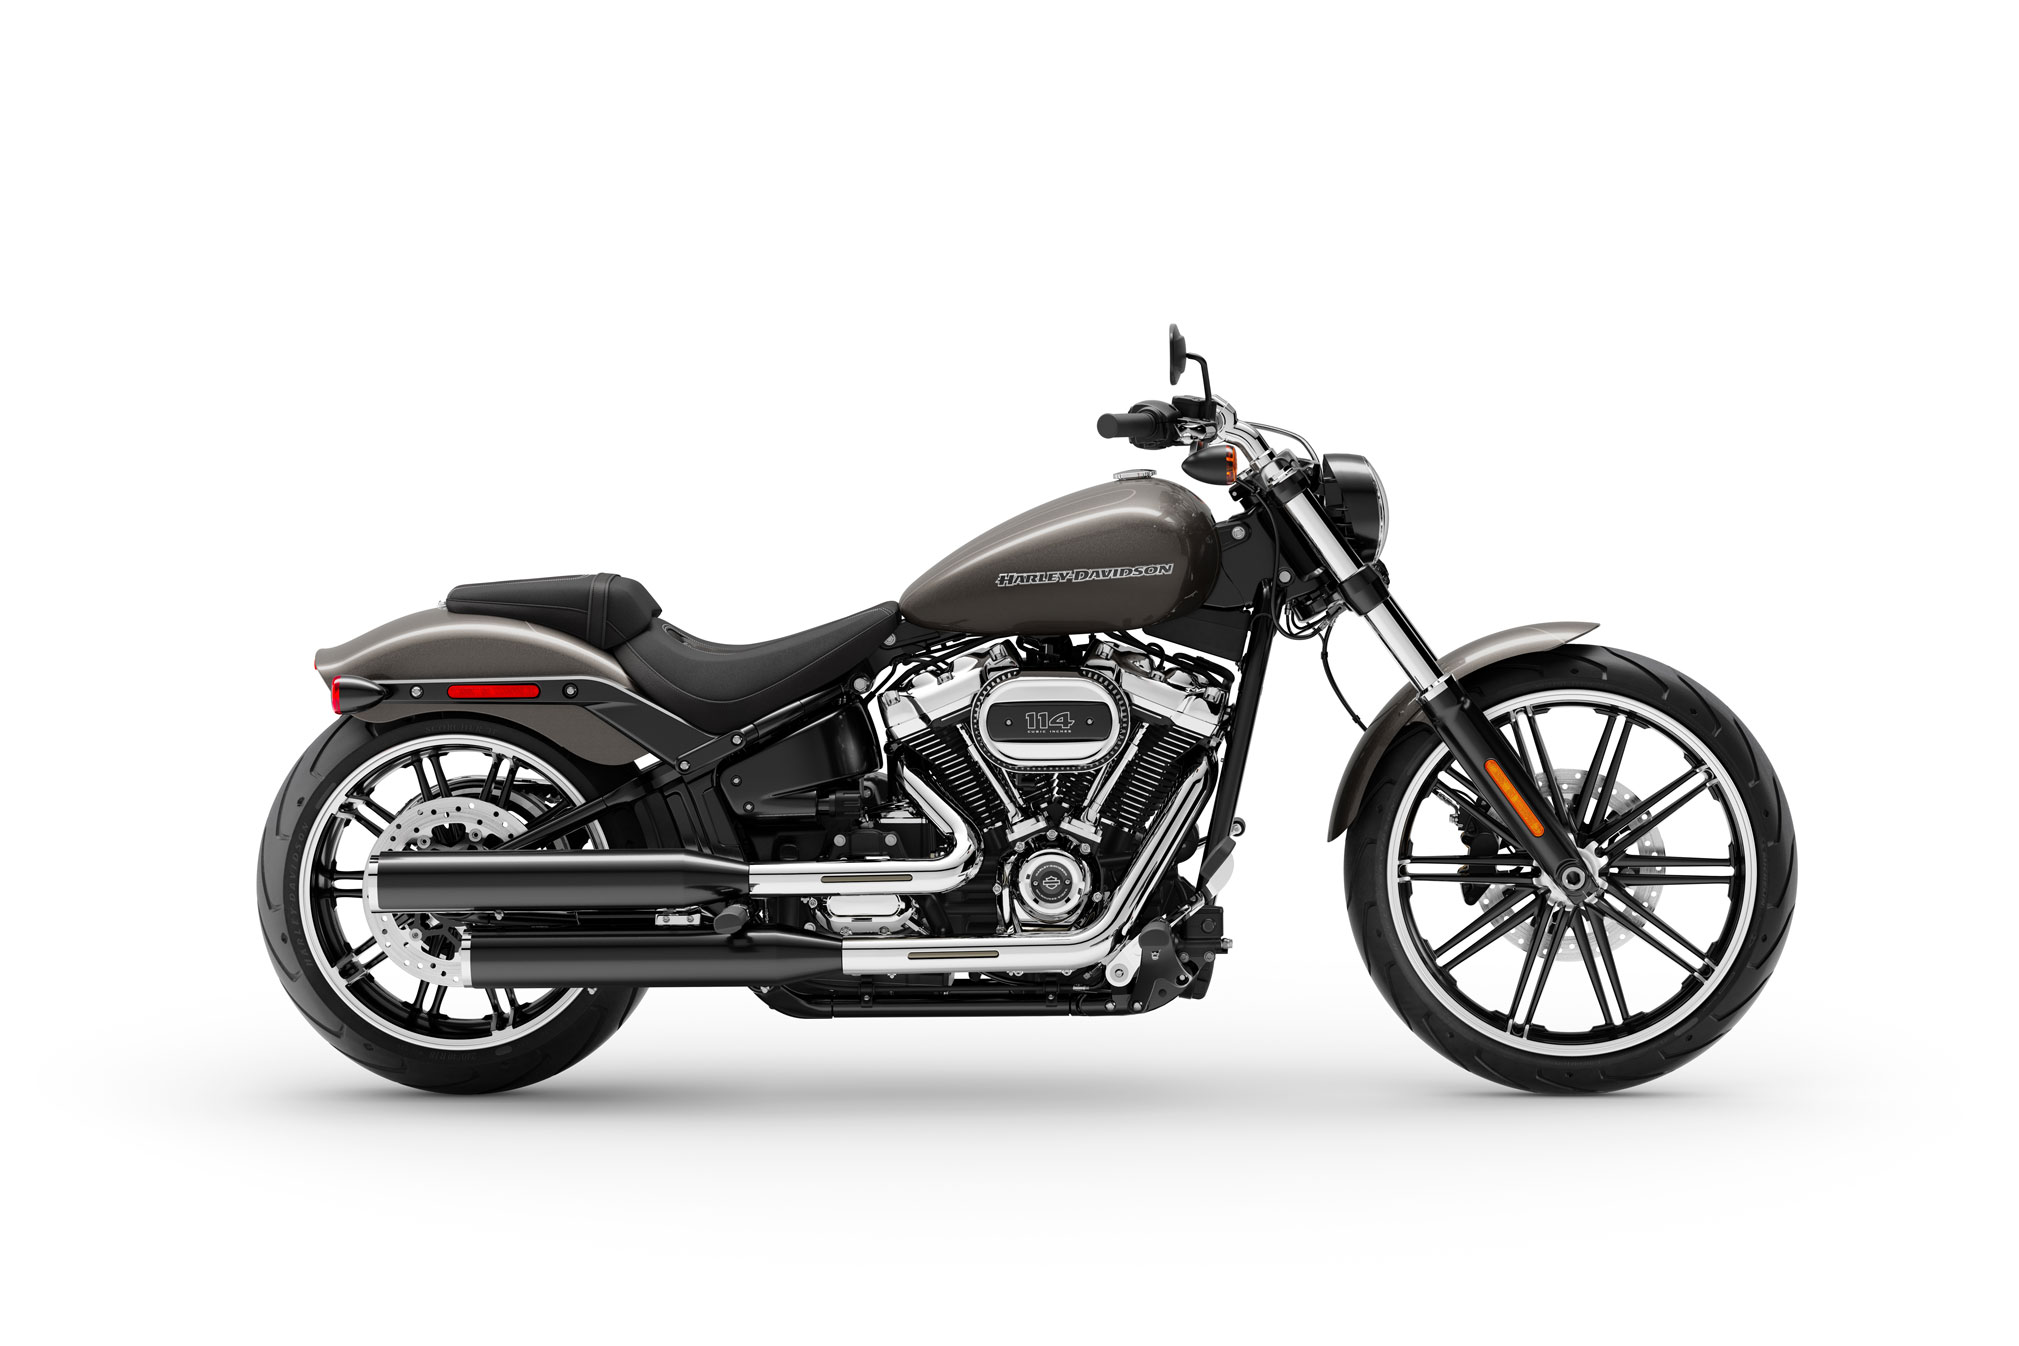 2022 Harley Davidson Motorcycle Guide Youtube